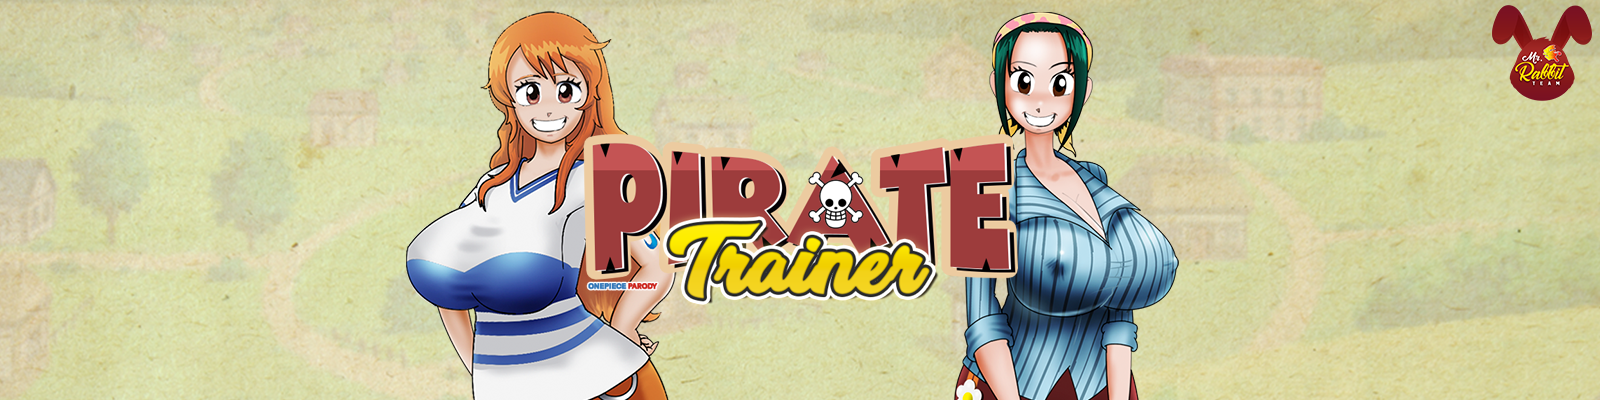 Pirate Trainer